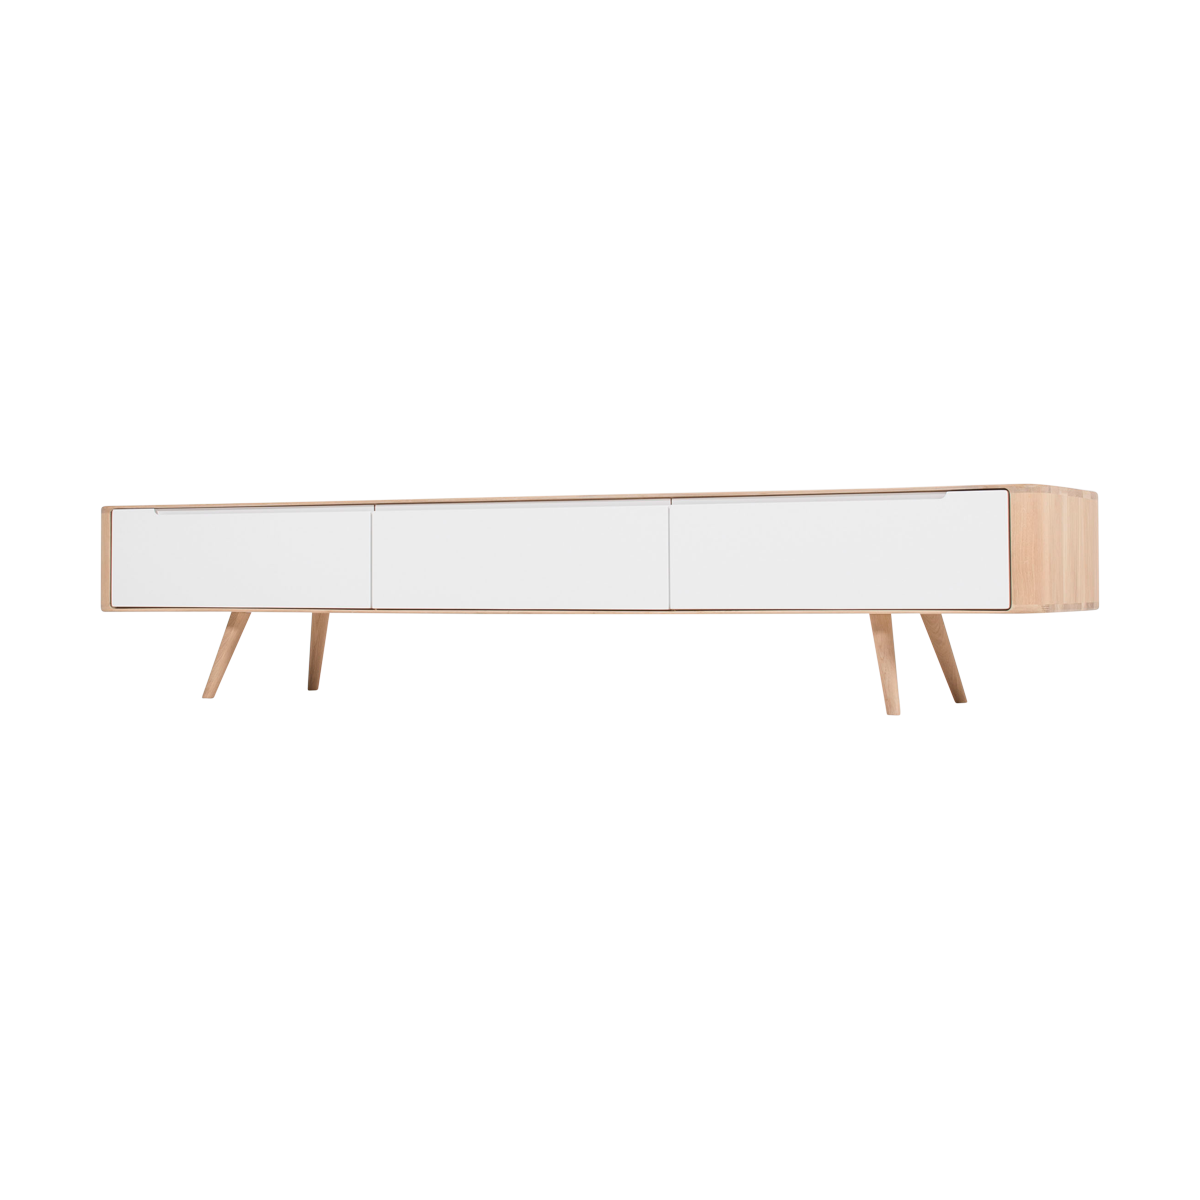 Ena lowboard houten tv meubel whitewash - 225 x 55 cm